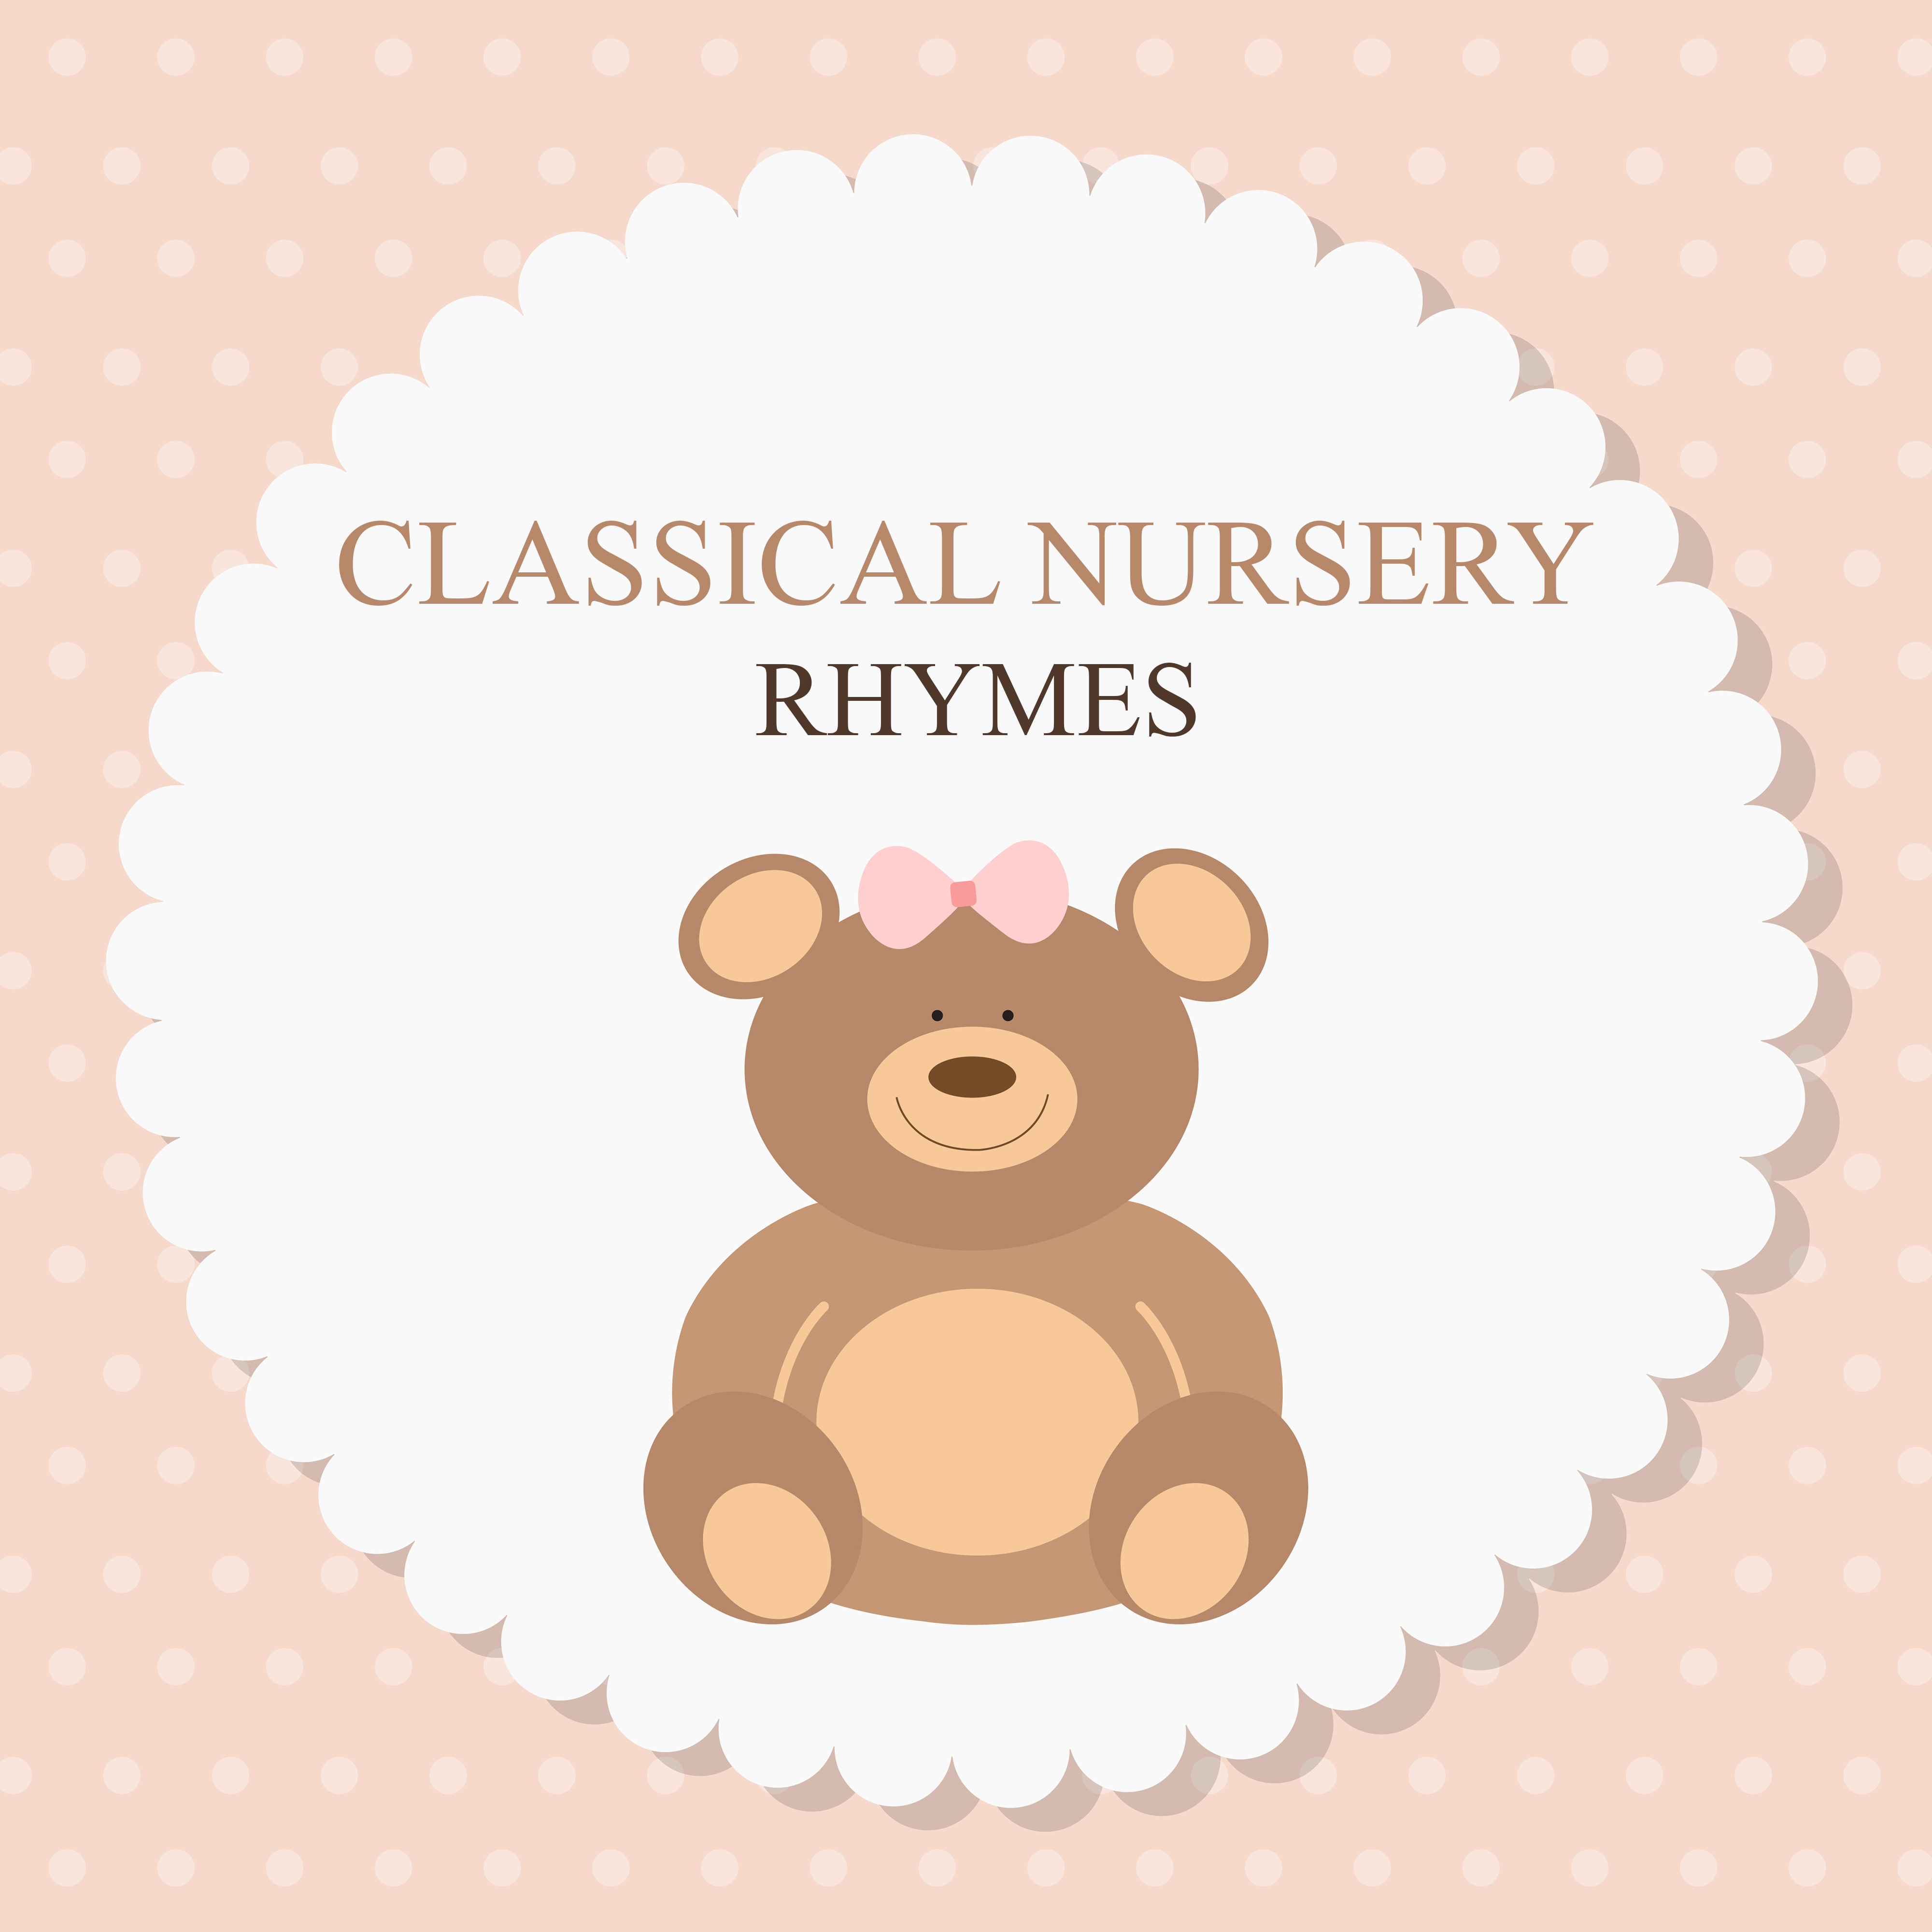 Classical Nursery Rhymes